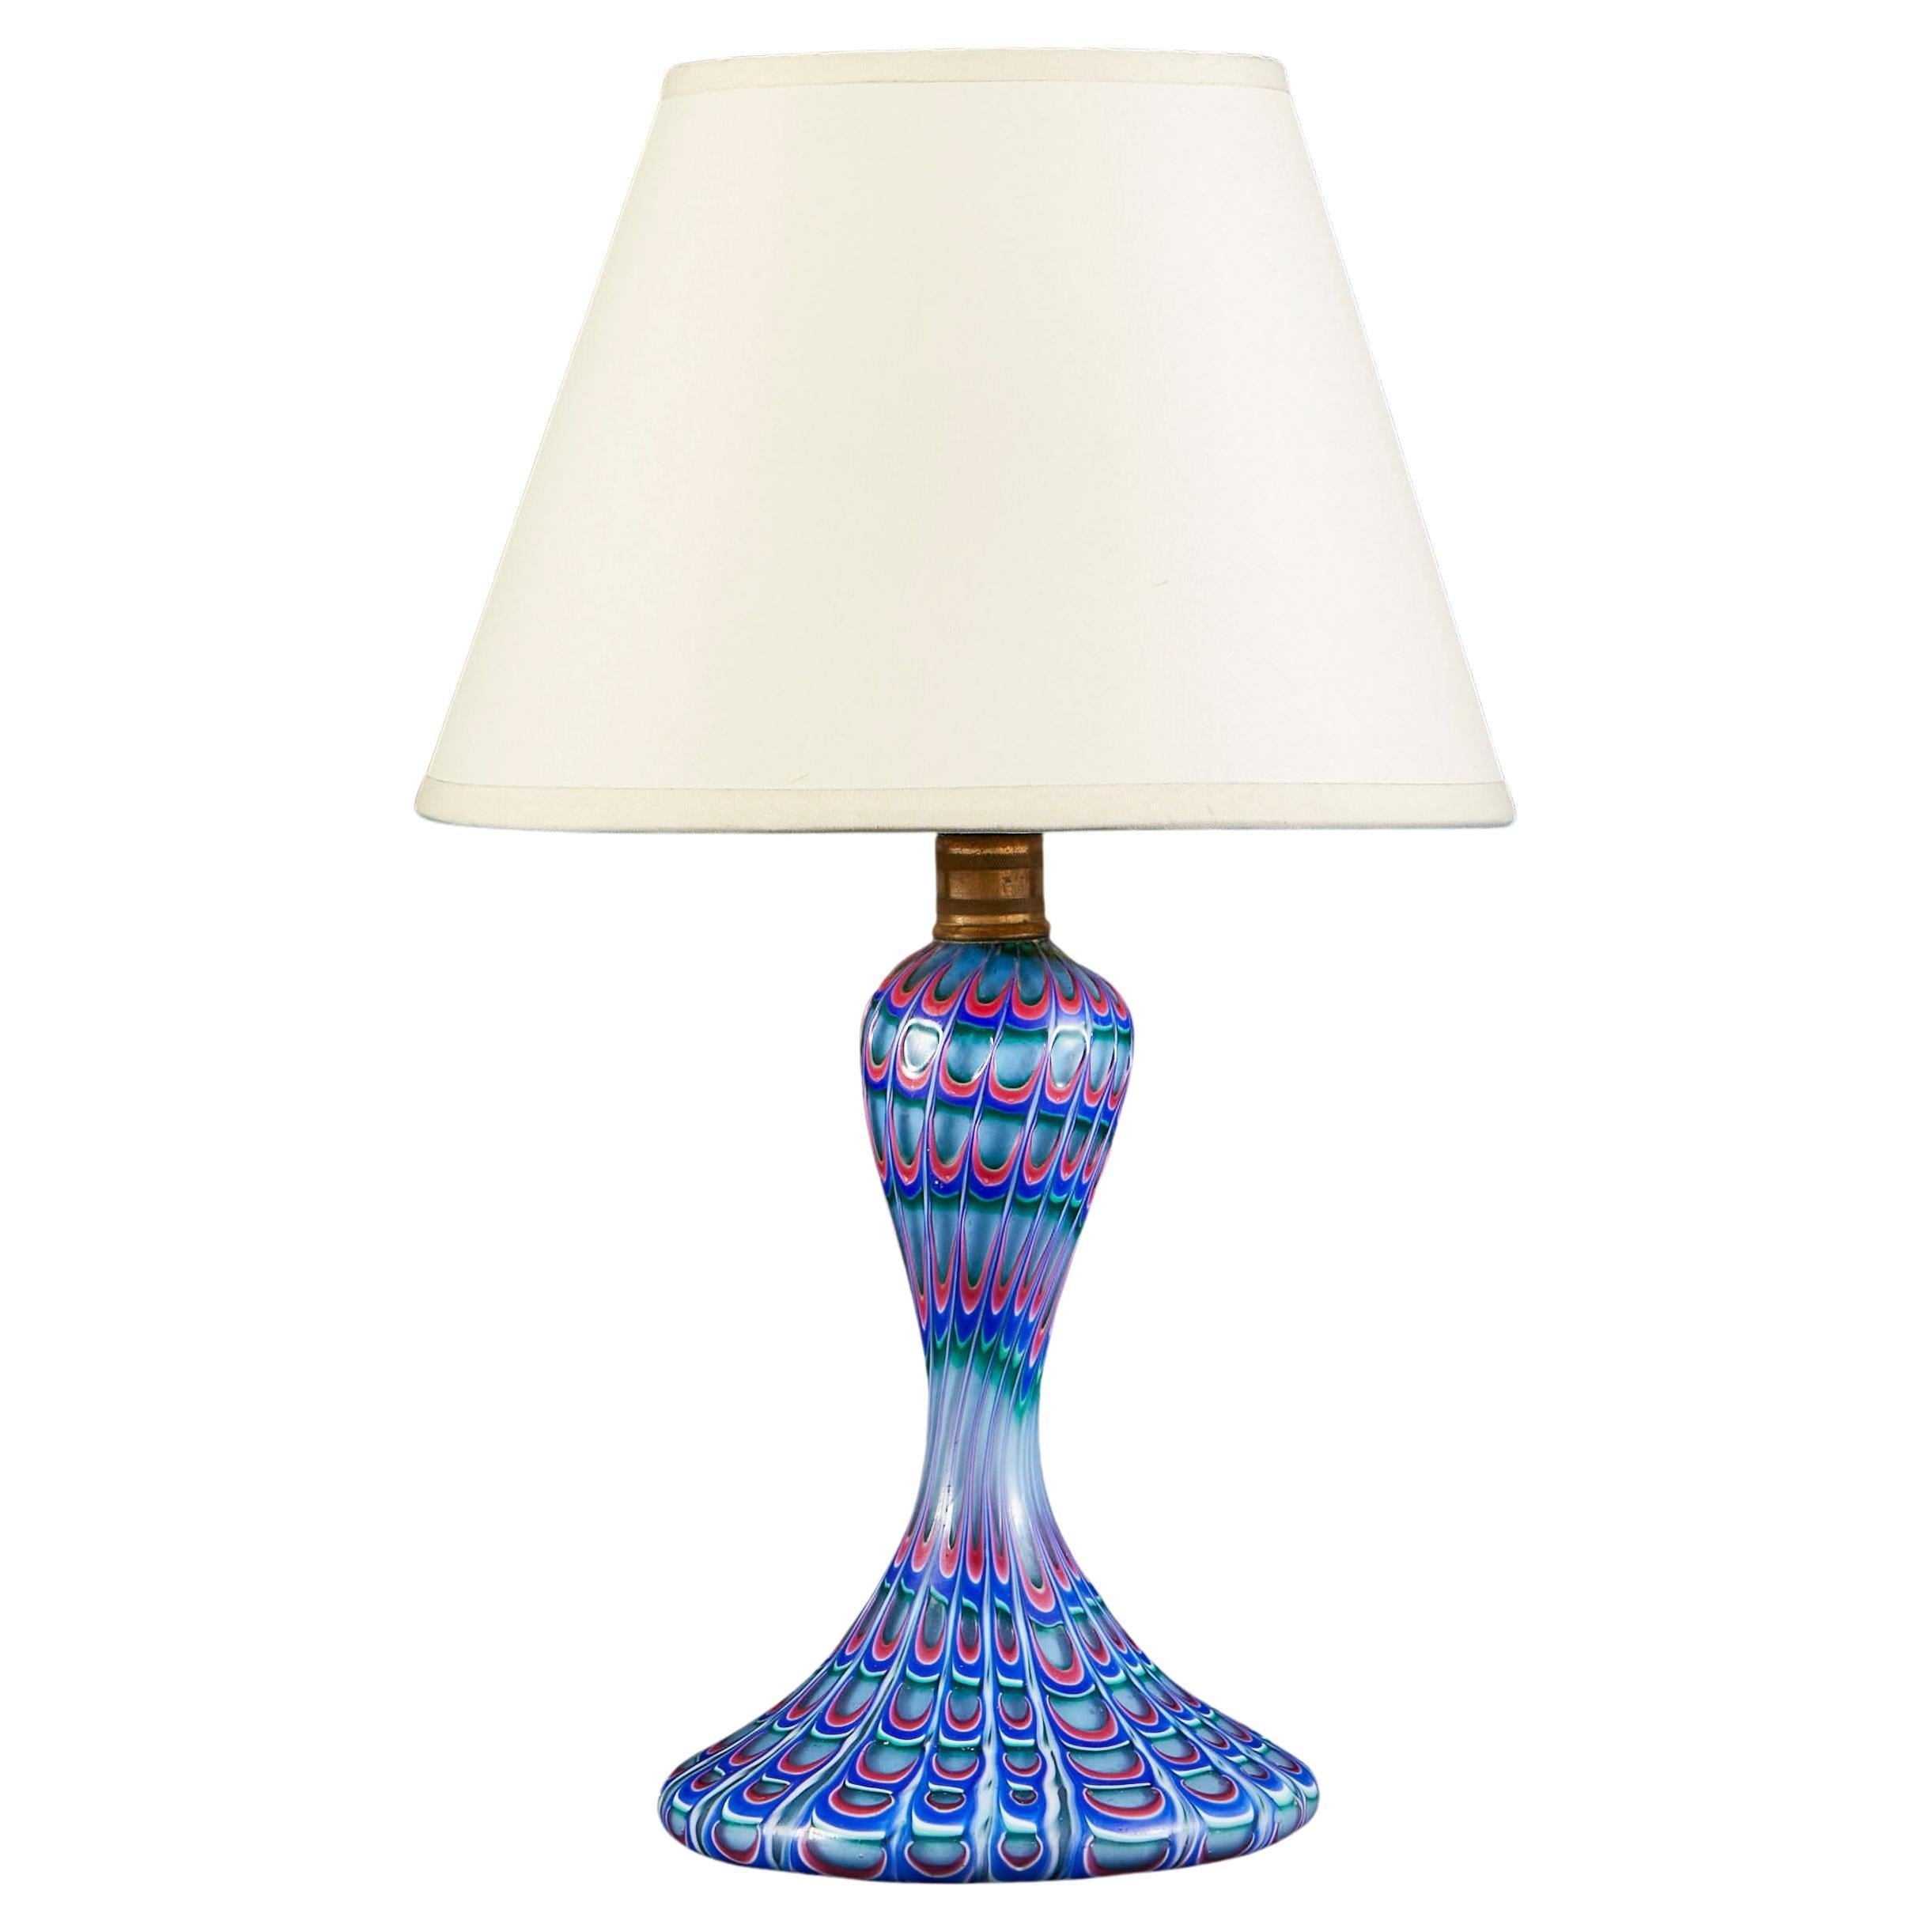 An Unusual Peacock Glaze Murano Lamp by Seguso For Sale